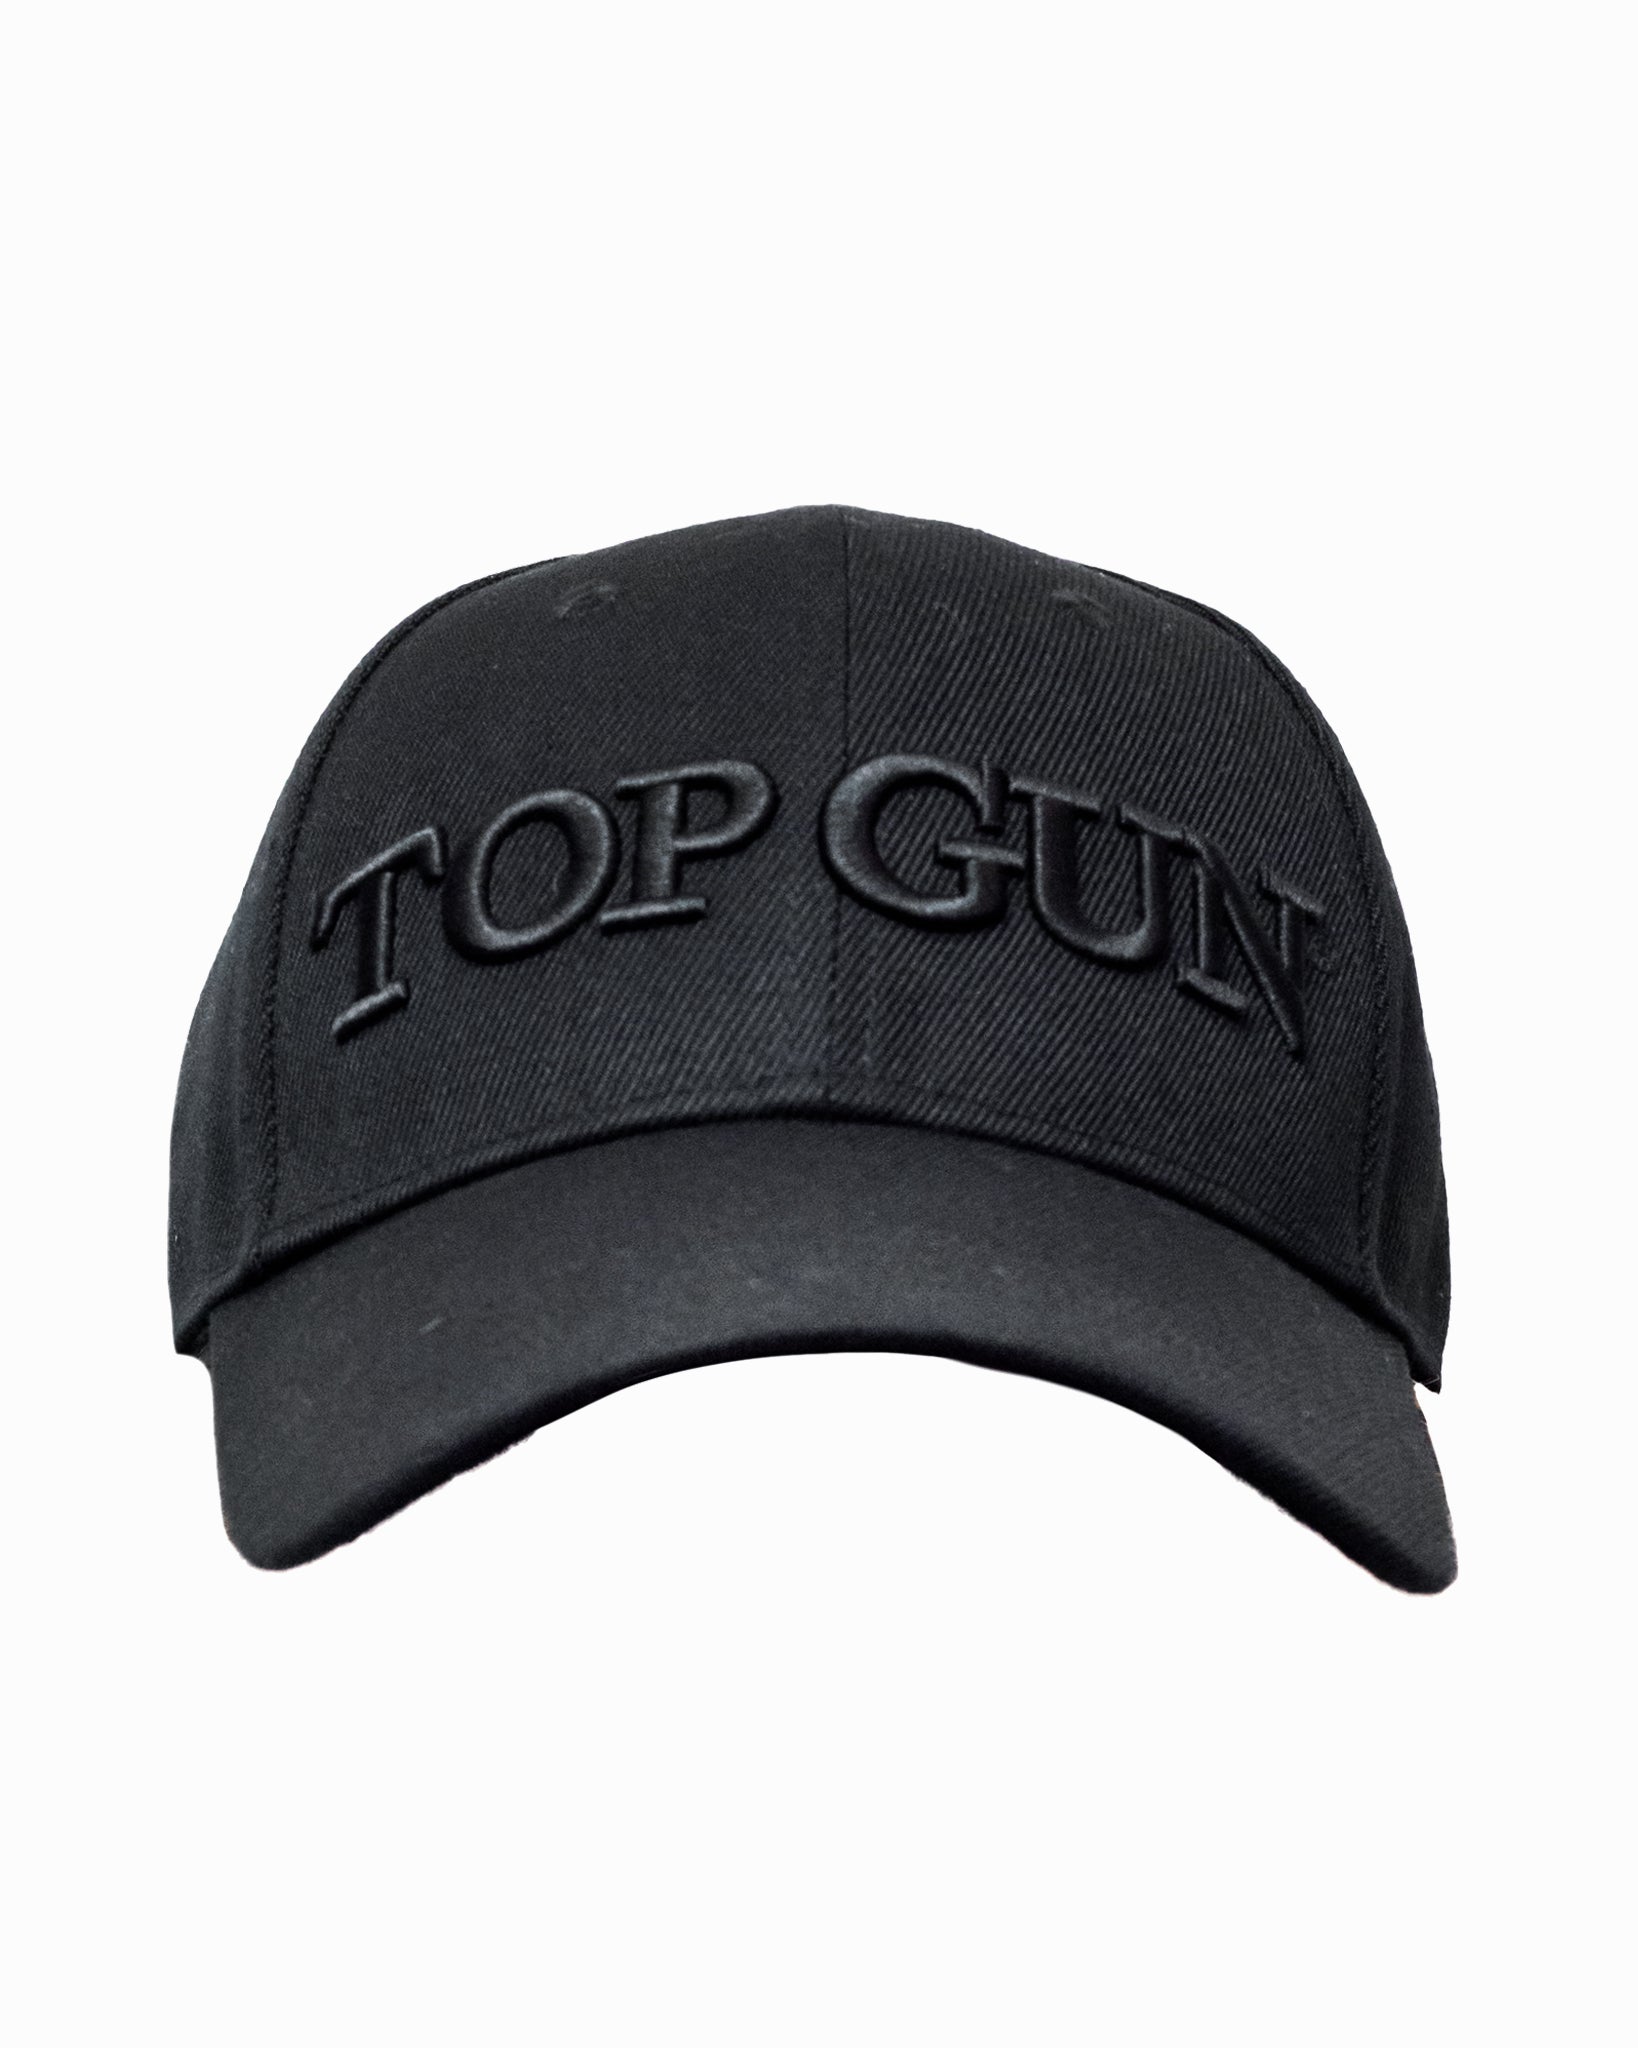 Logo Cap Top Gun | The Top Gun Official Store – Top Gun Store